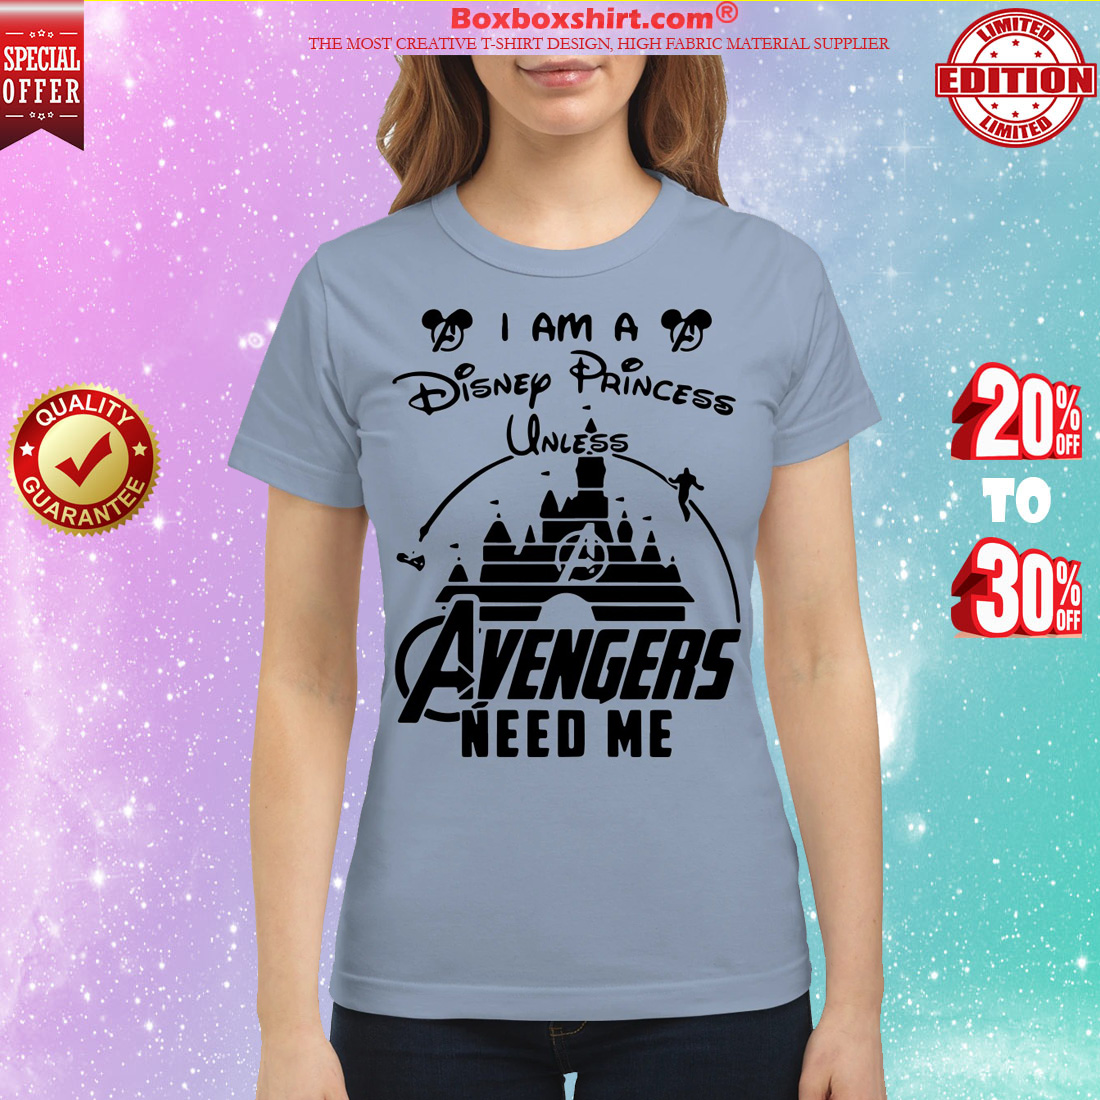 I am a Disney Princess unless Avengers need me classic shirt